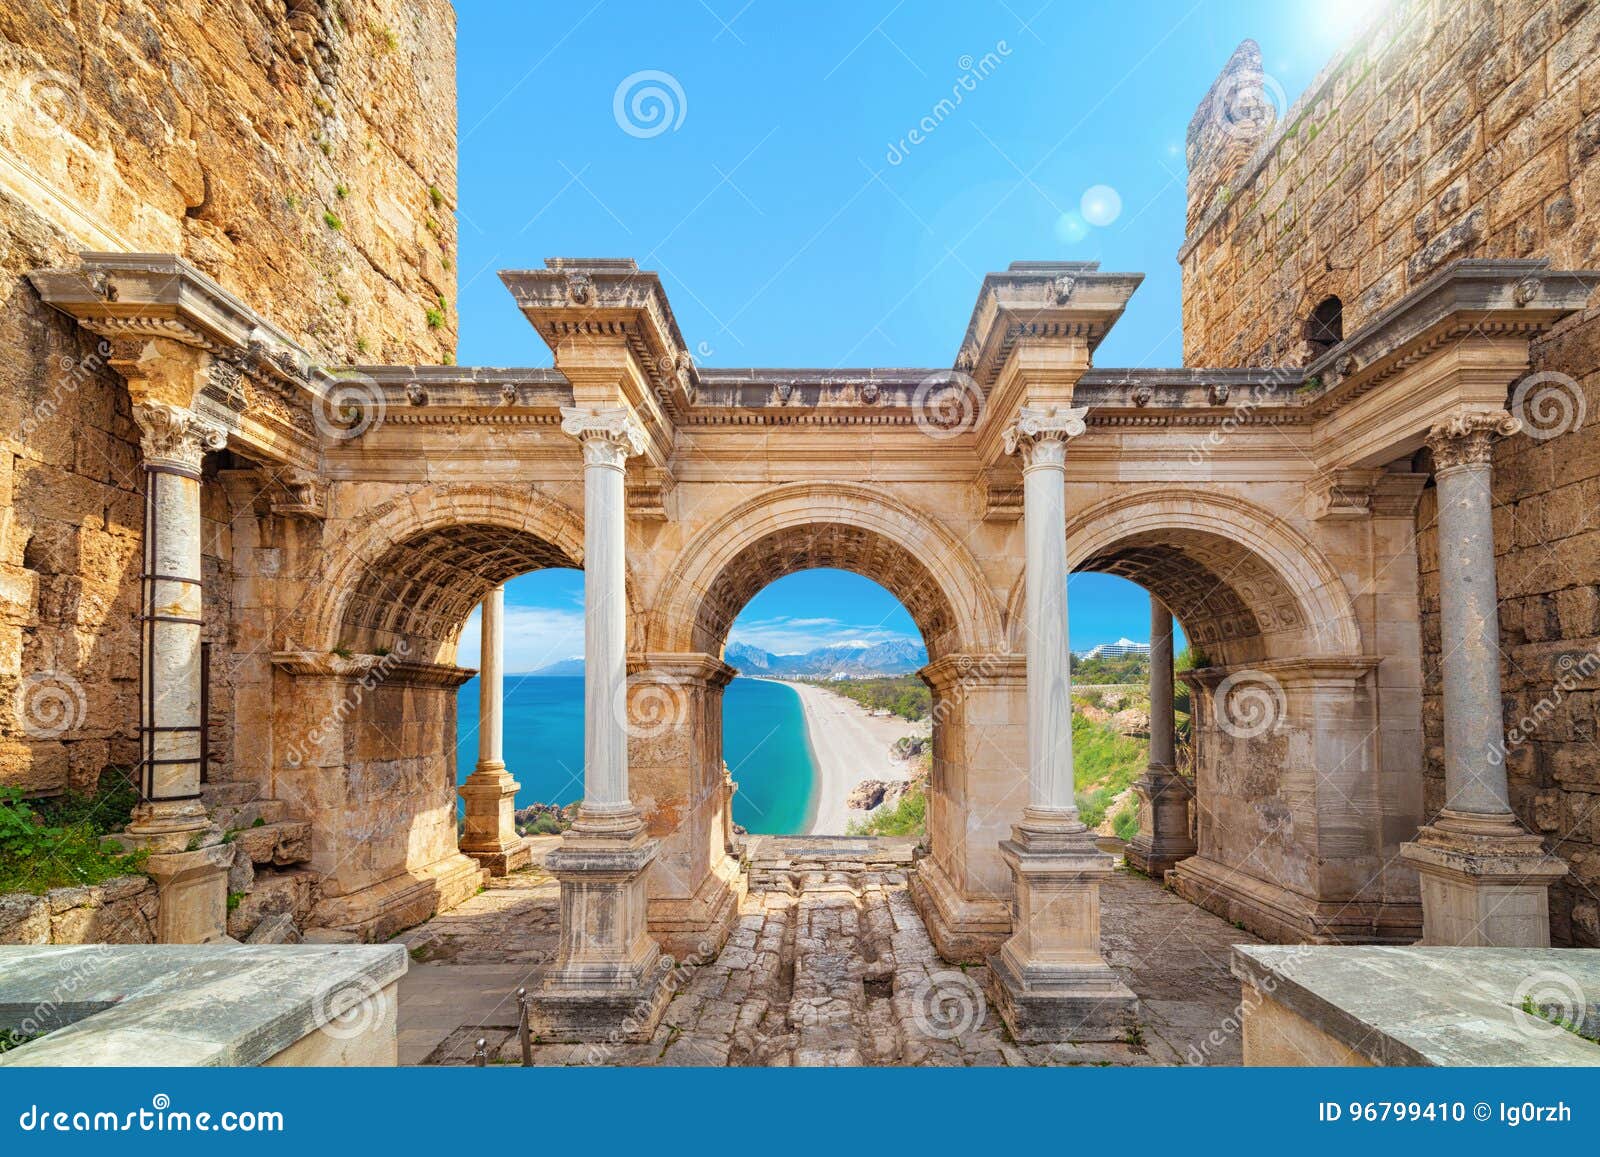 hadrian`s gate - entrance to antalya, turkey